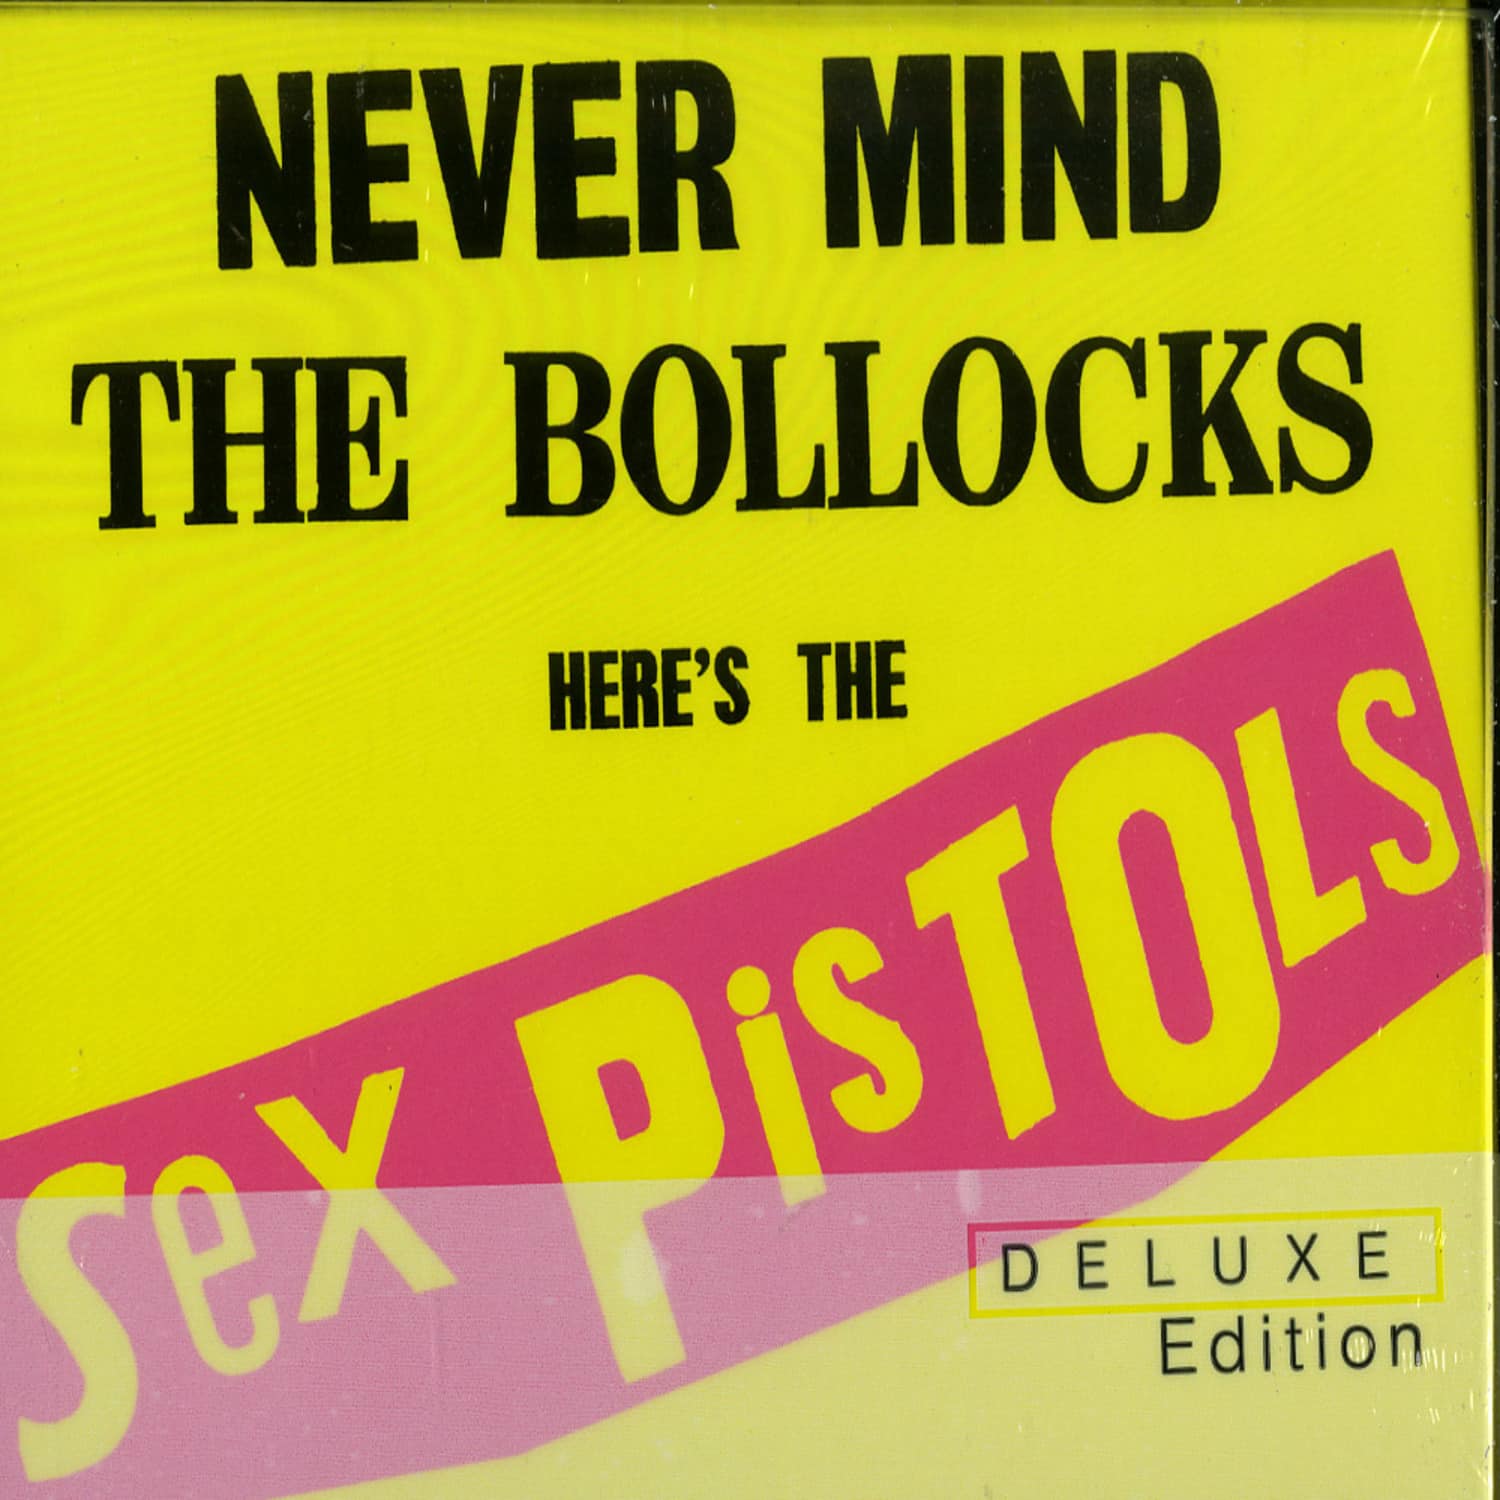 Sex Pistols - NEVER MIND THE BULLOCKS 